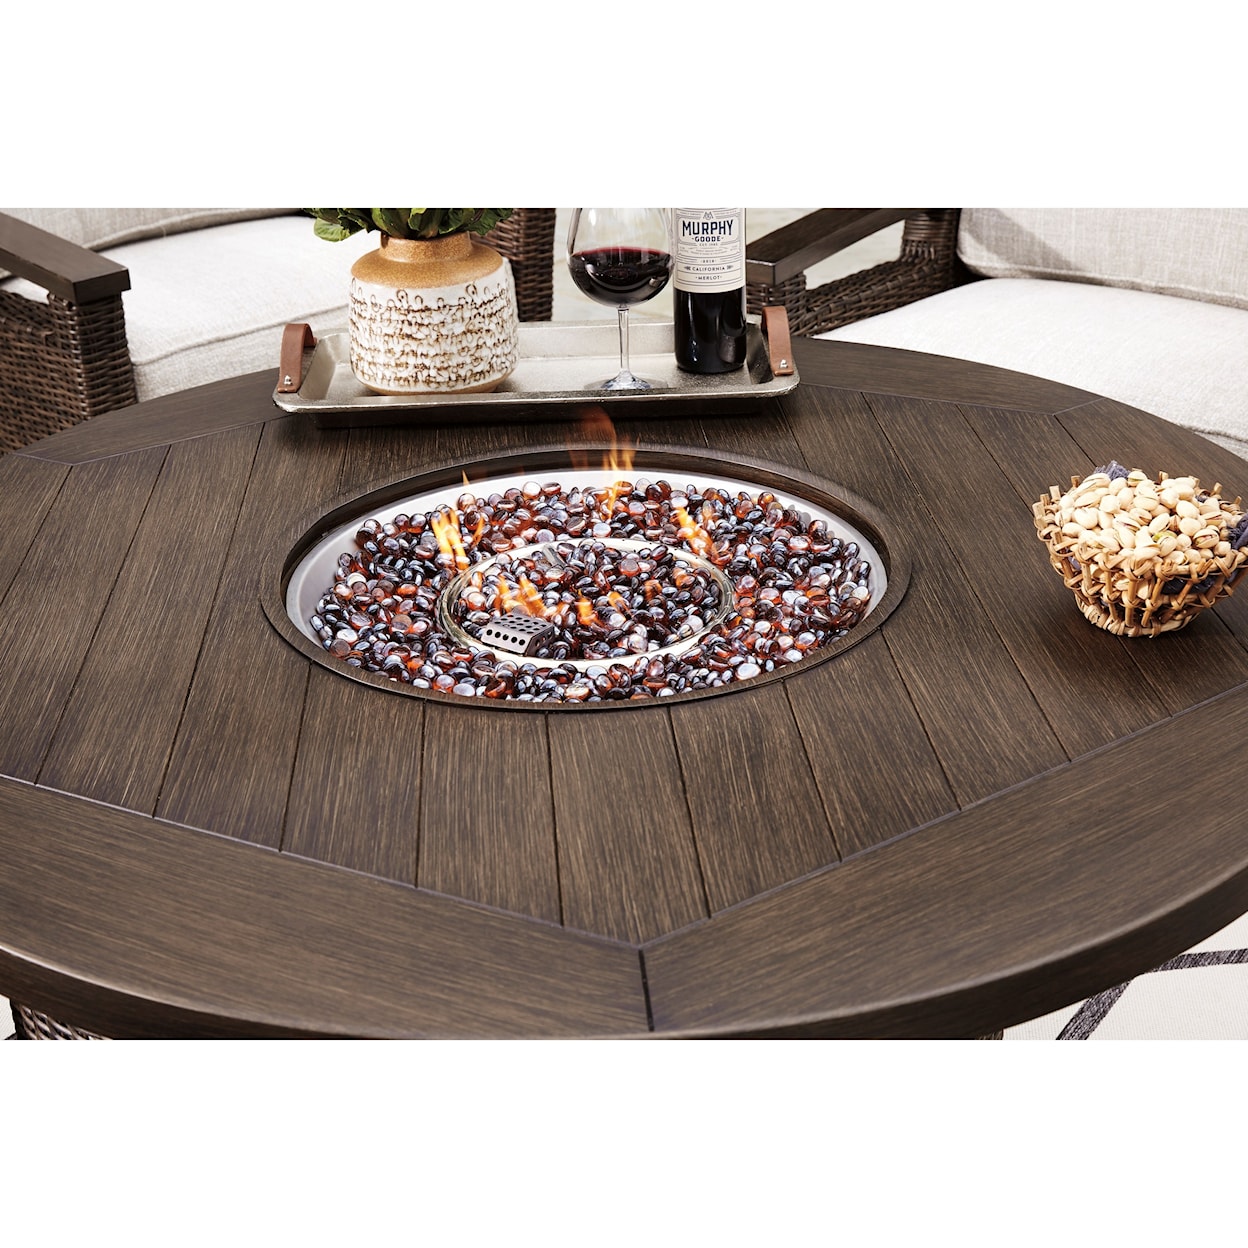 Michael Alan Select Paradise Trail Outdoor Fire Pit Table Set